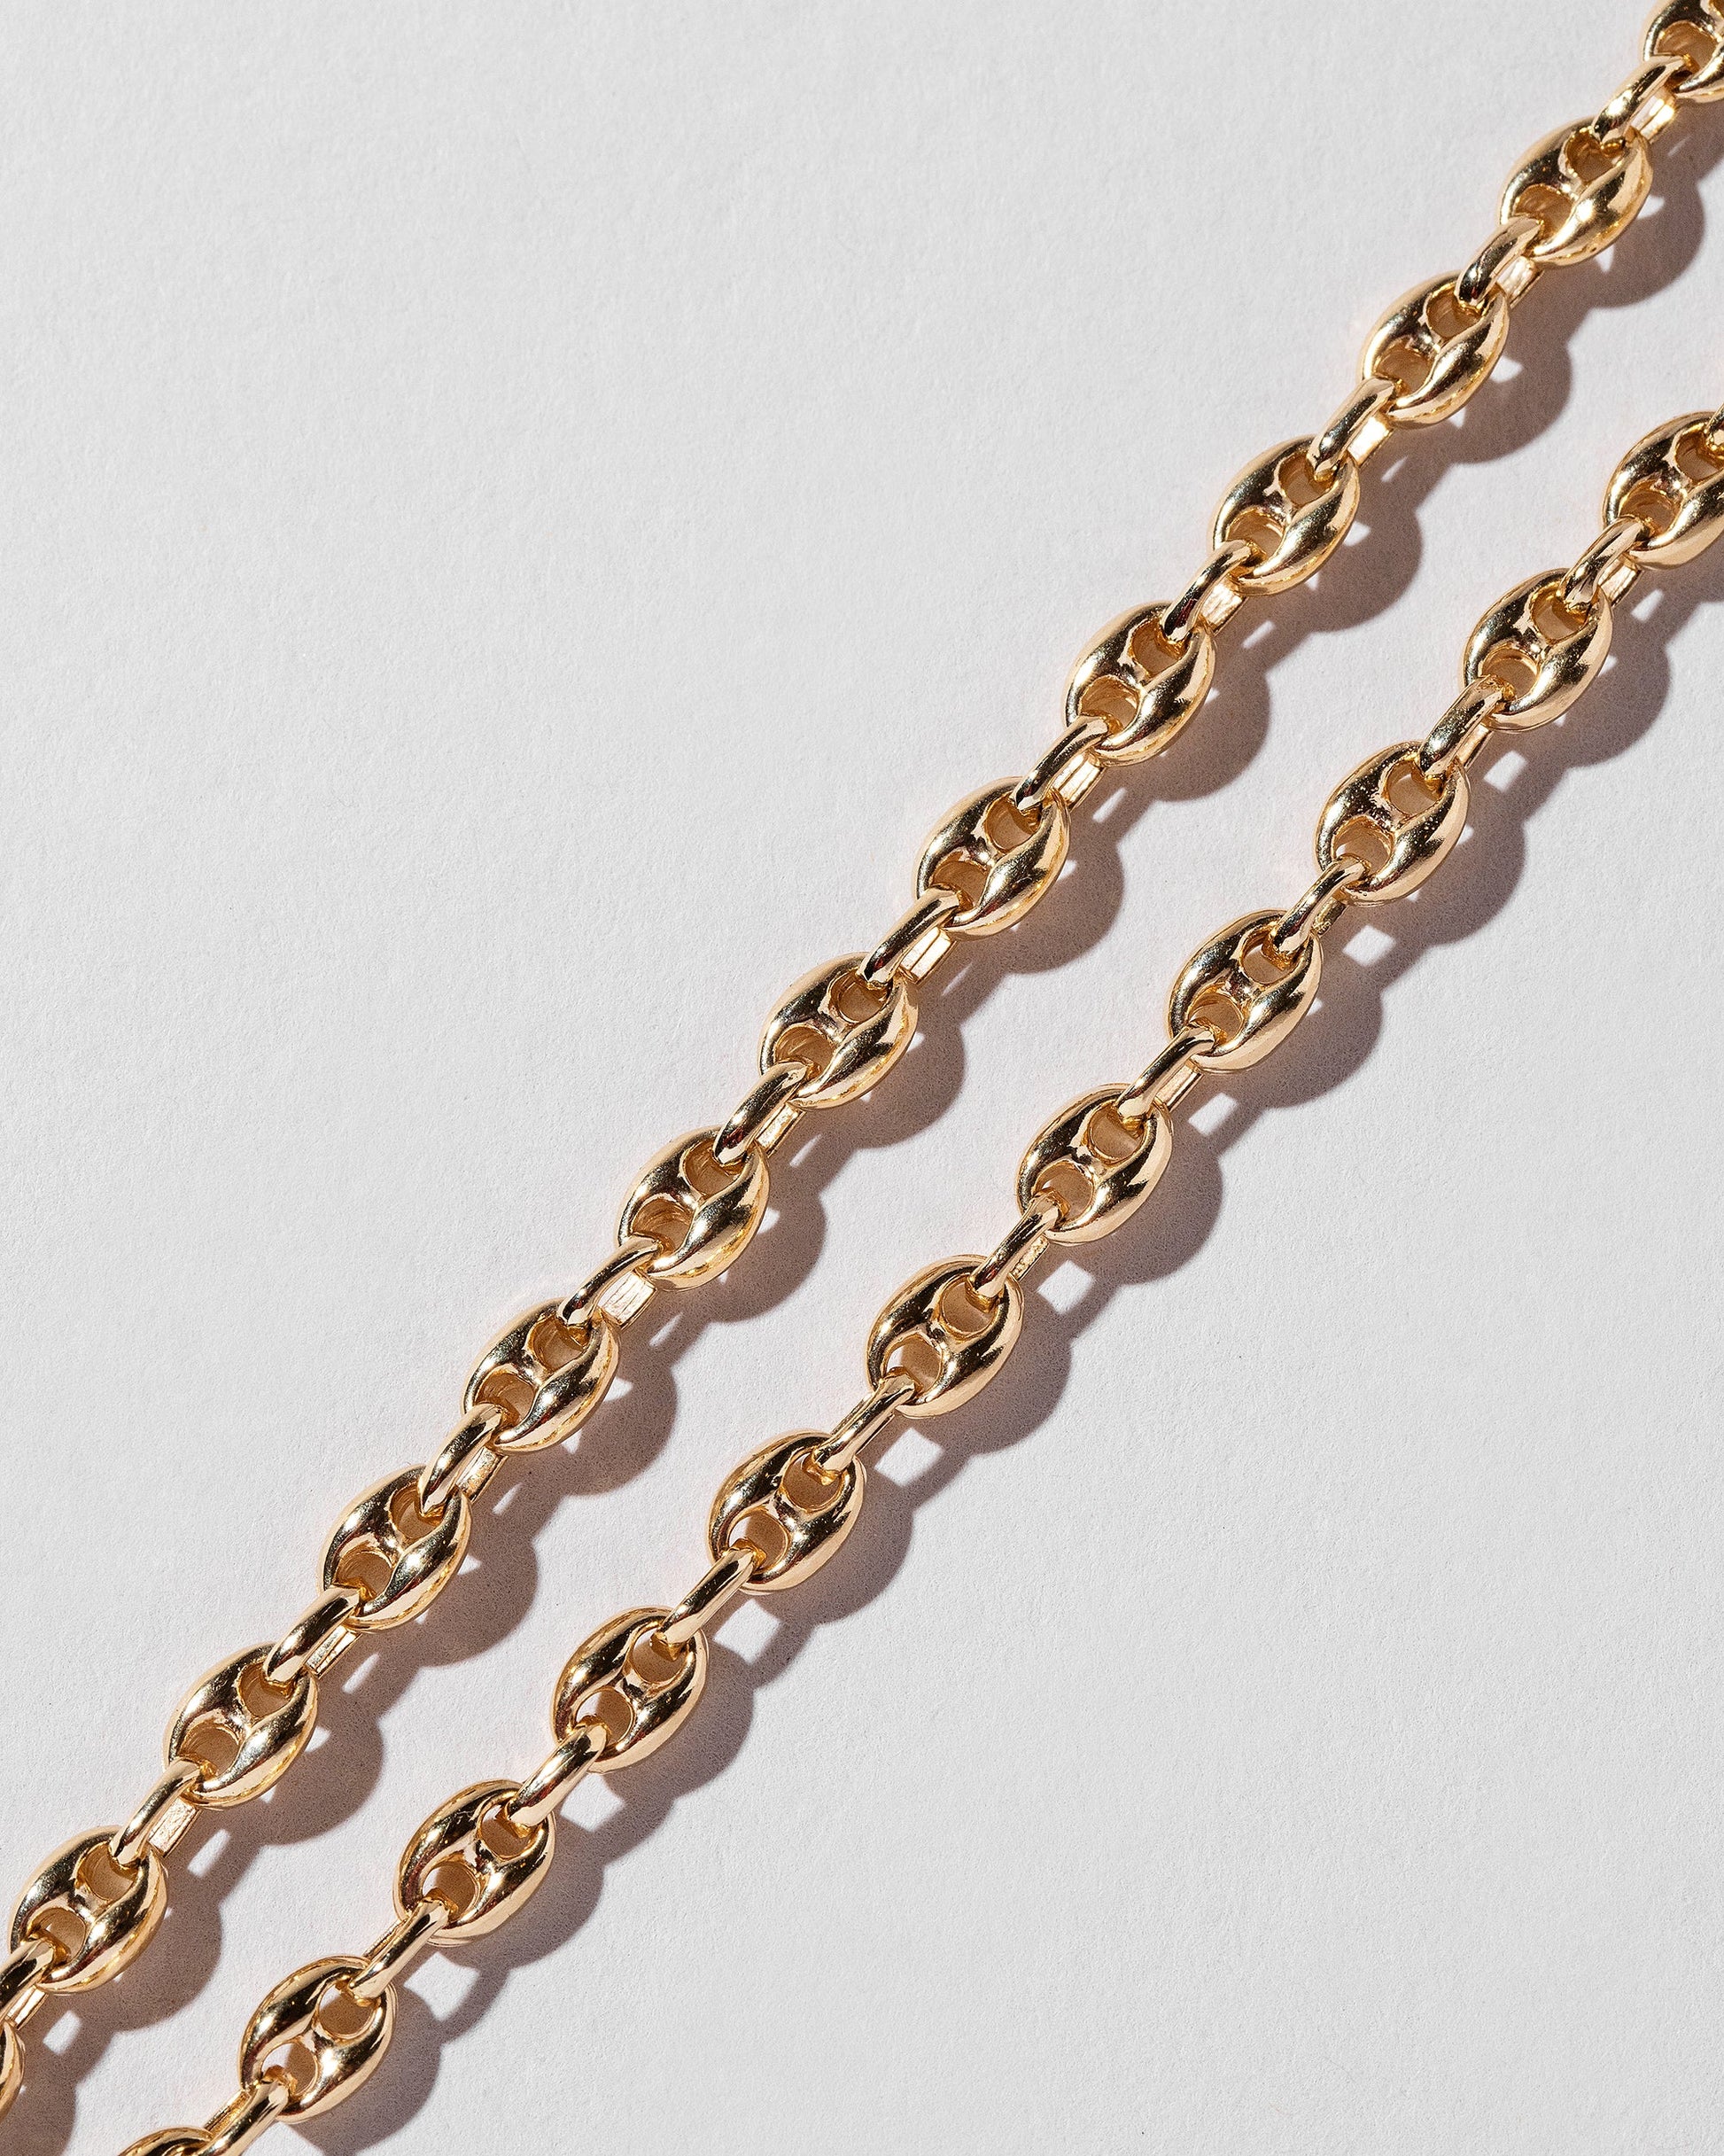  Segmented Chain Bracelets on light color background.